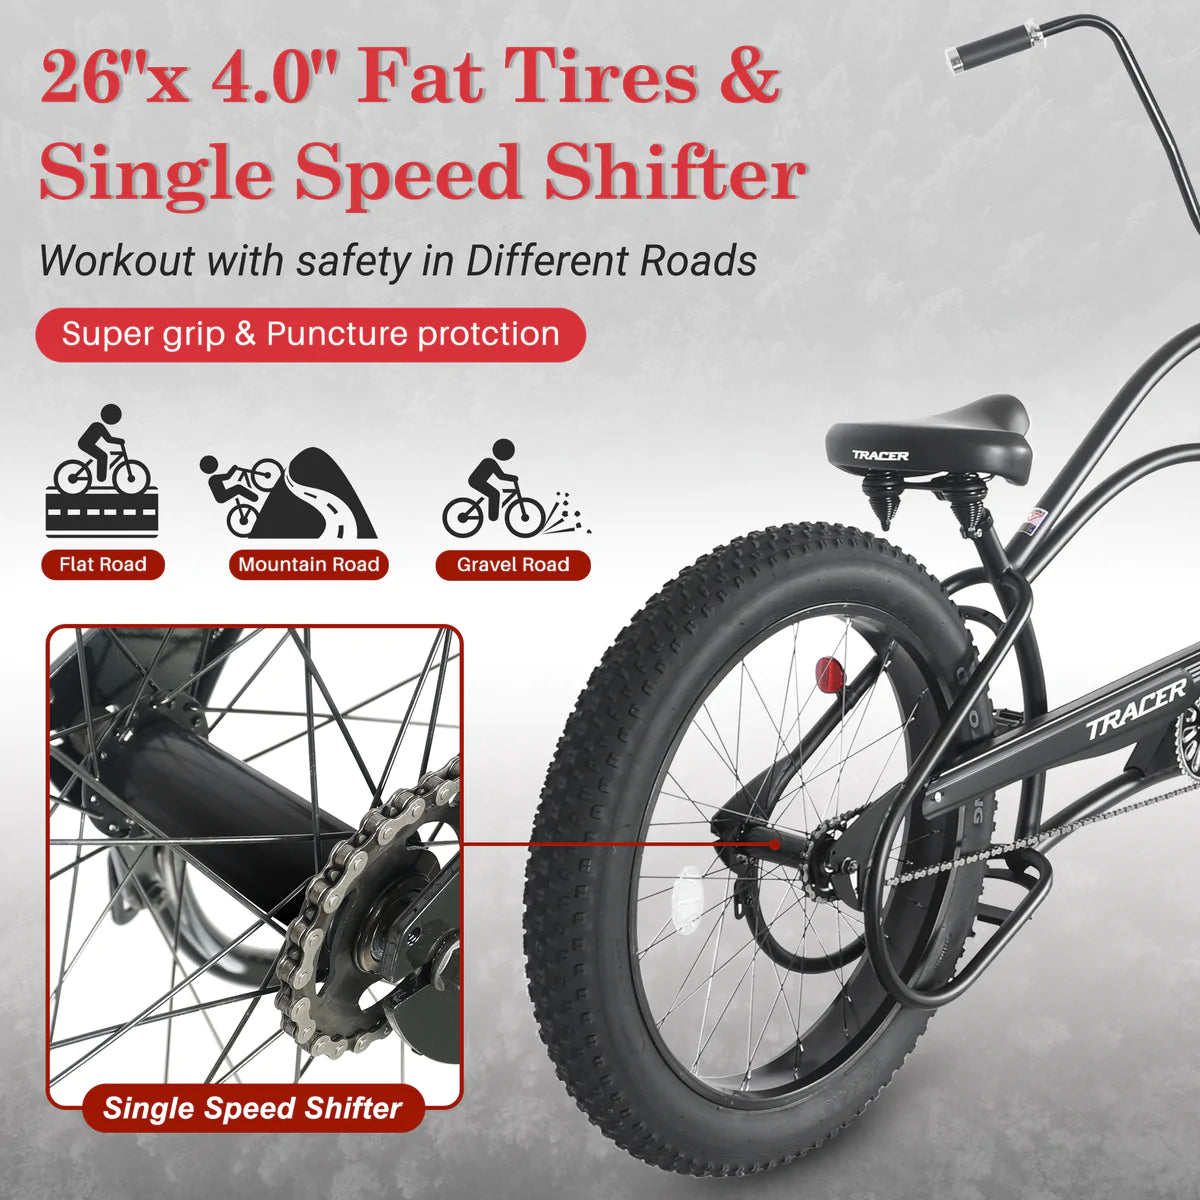 Tracer Harman GT Chopper Stretch Cruiser Fat Tire Bike | Fat Tire Bike | Cruiser Fat Tire Bike | Stretch Bike | Fat Tire | Bike Lover USA